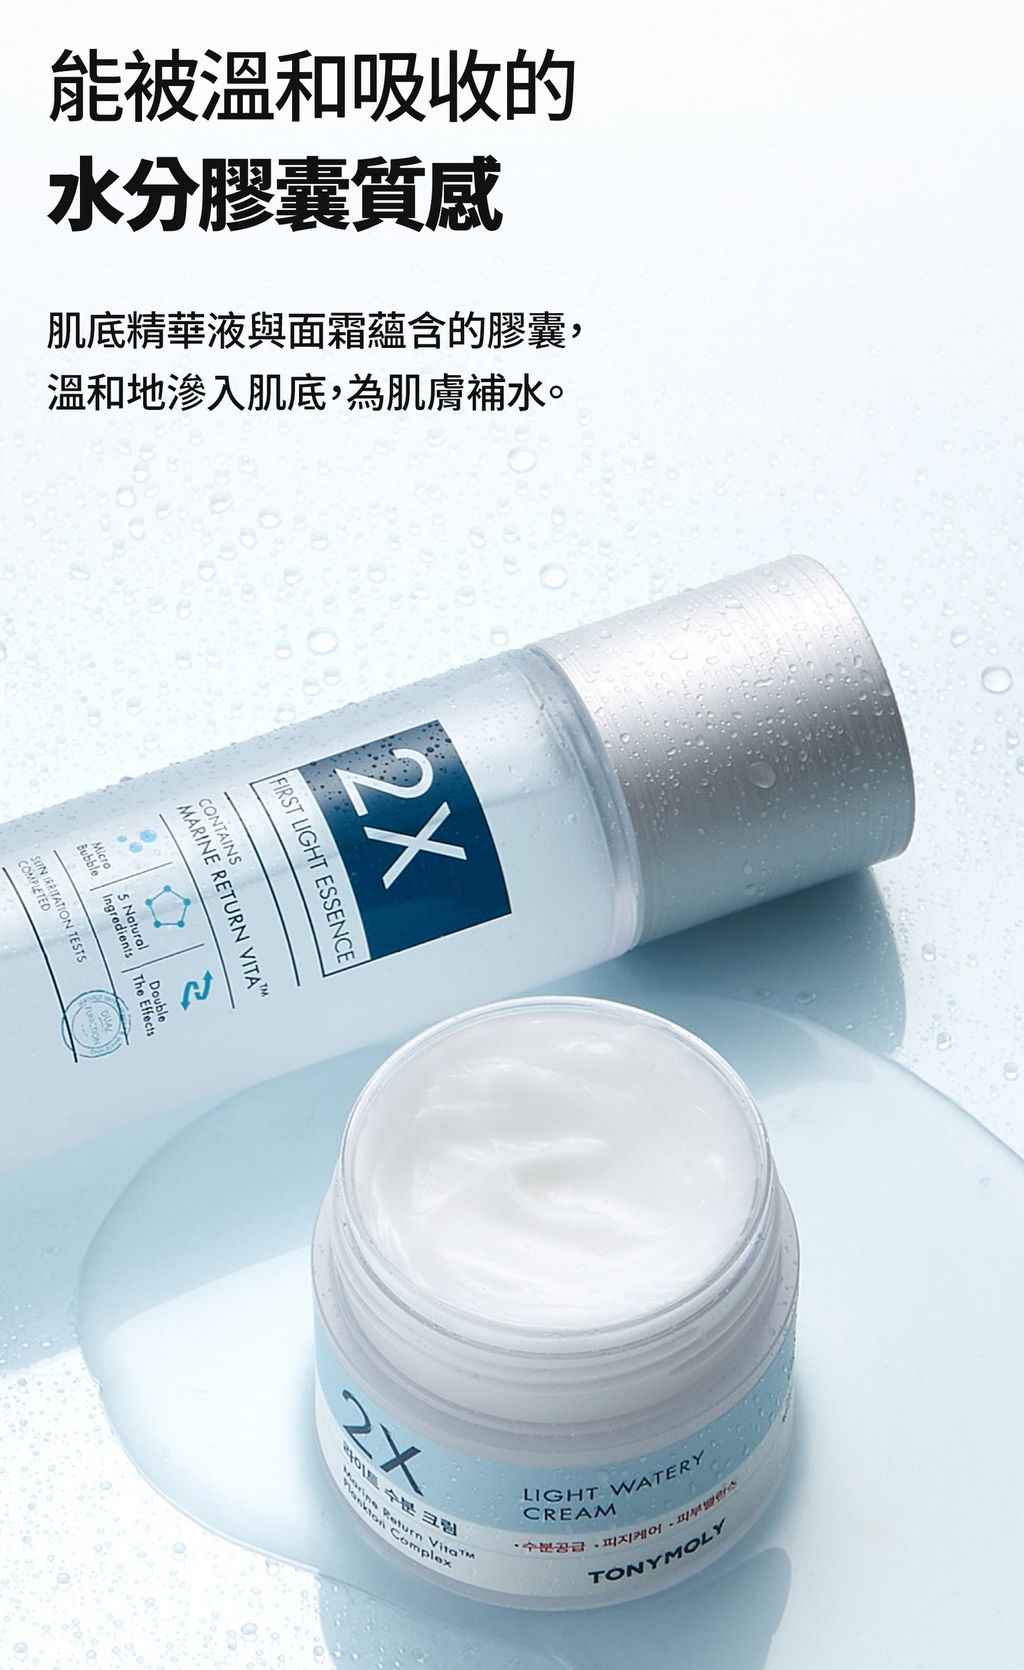 2X-Light-Watery-Skincare-Set_hk6.jpg